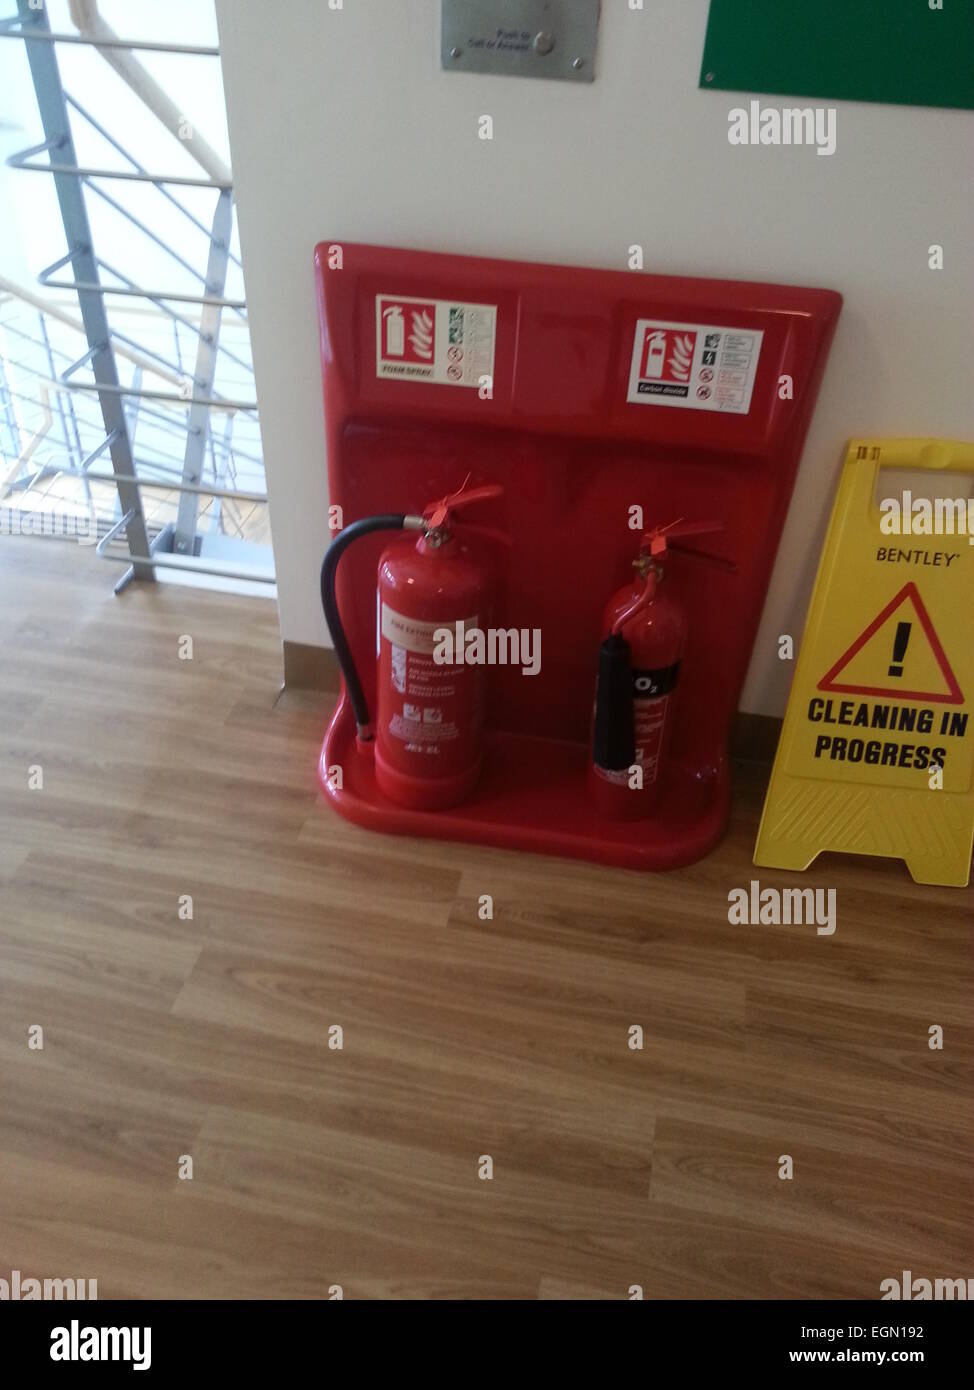 Fire extinguisher Stock Photo